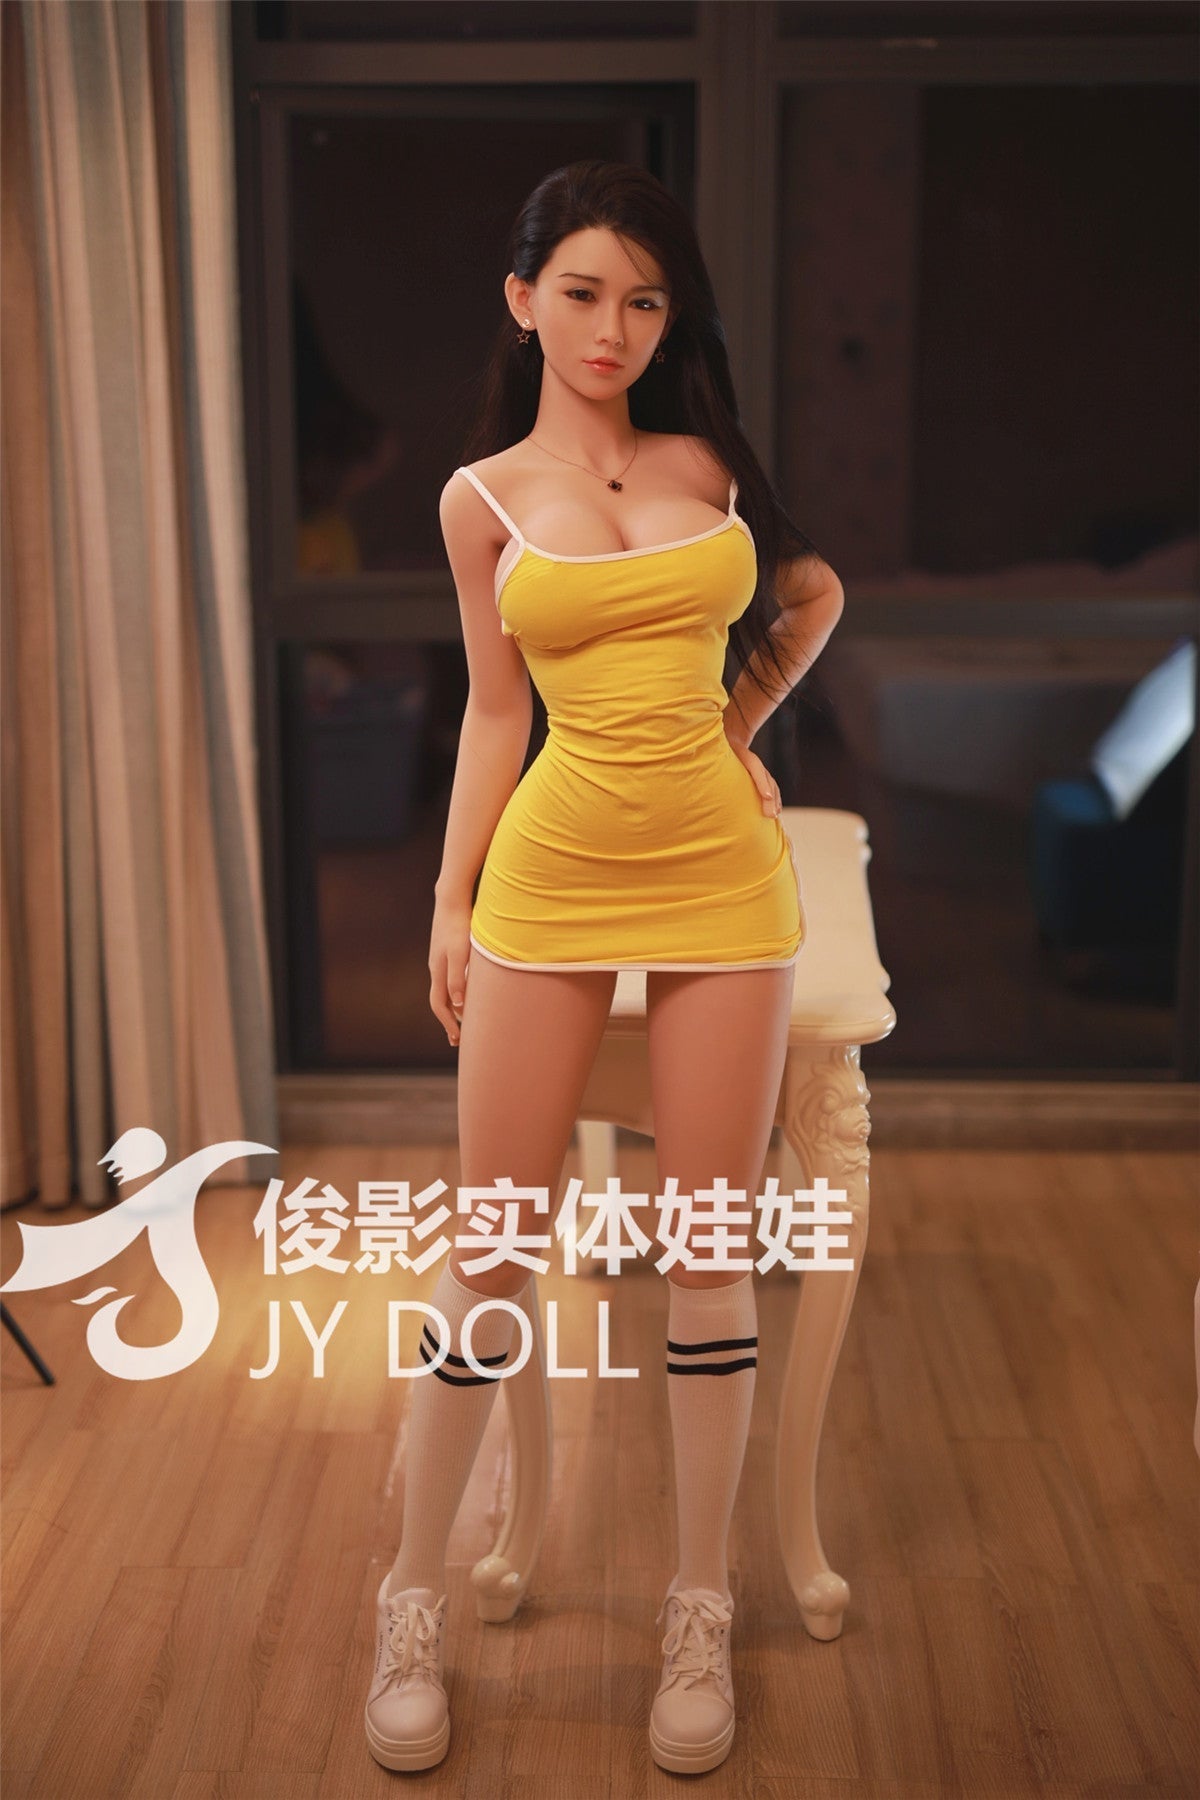 JY Doll 161 cm Fusion - Winnie | Buy Sex Dolls at DOLLS ACTUALLY